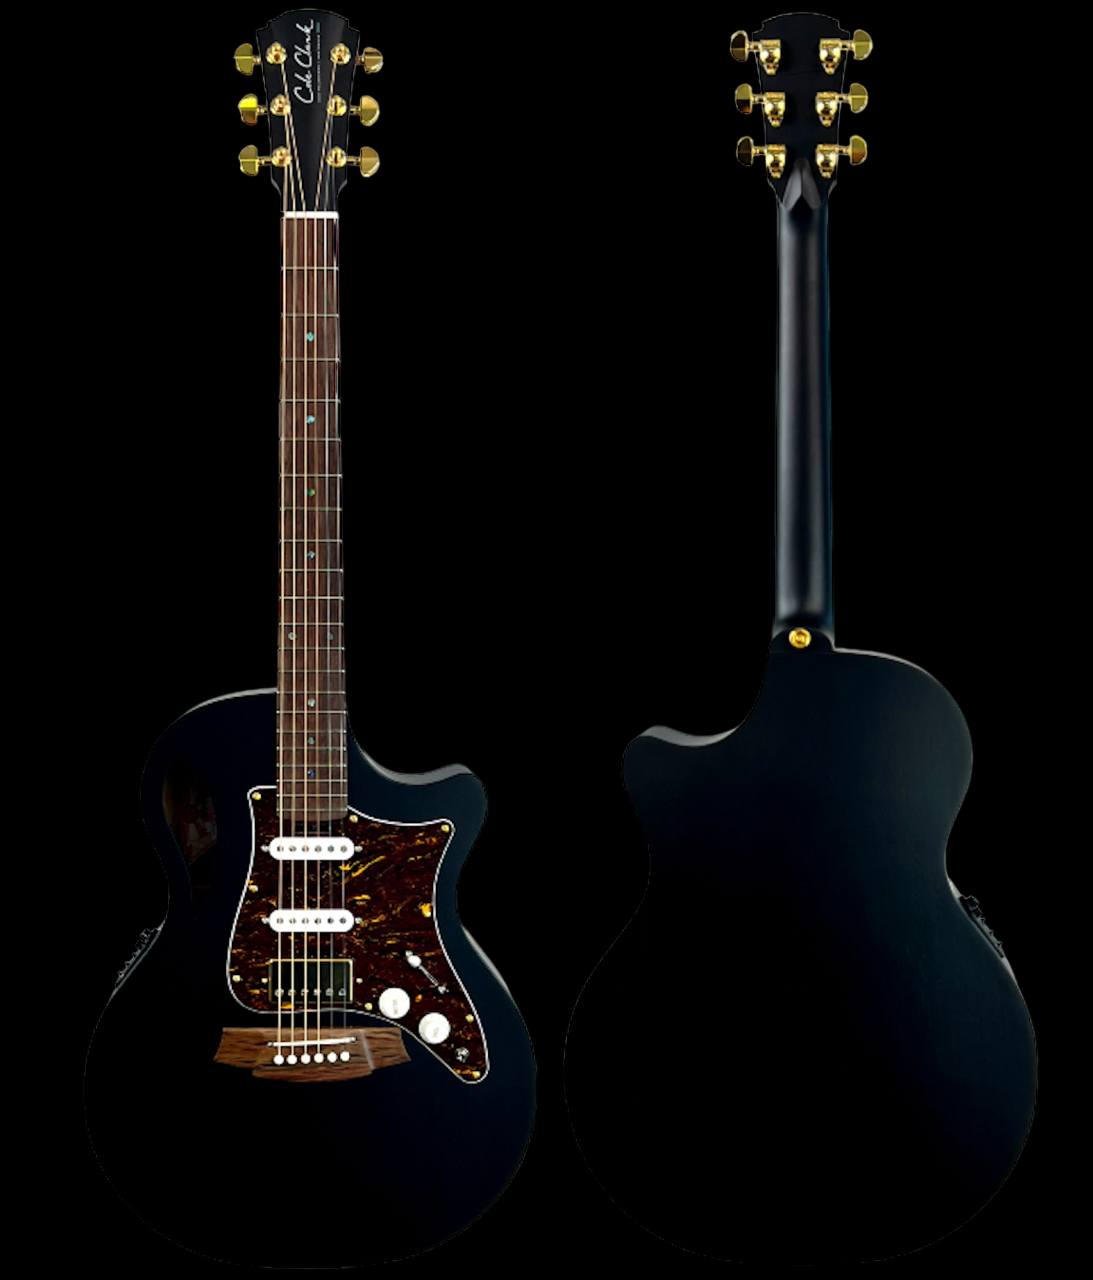 Cole Clark True Hybrid Black TL2EC-BLBL-HSS-BLK Guitar